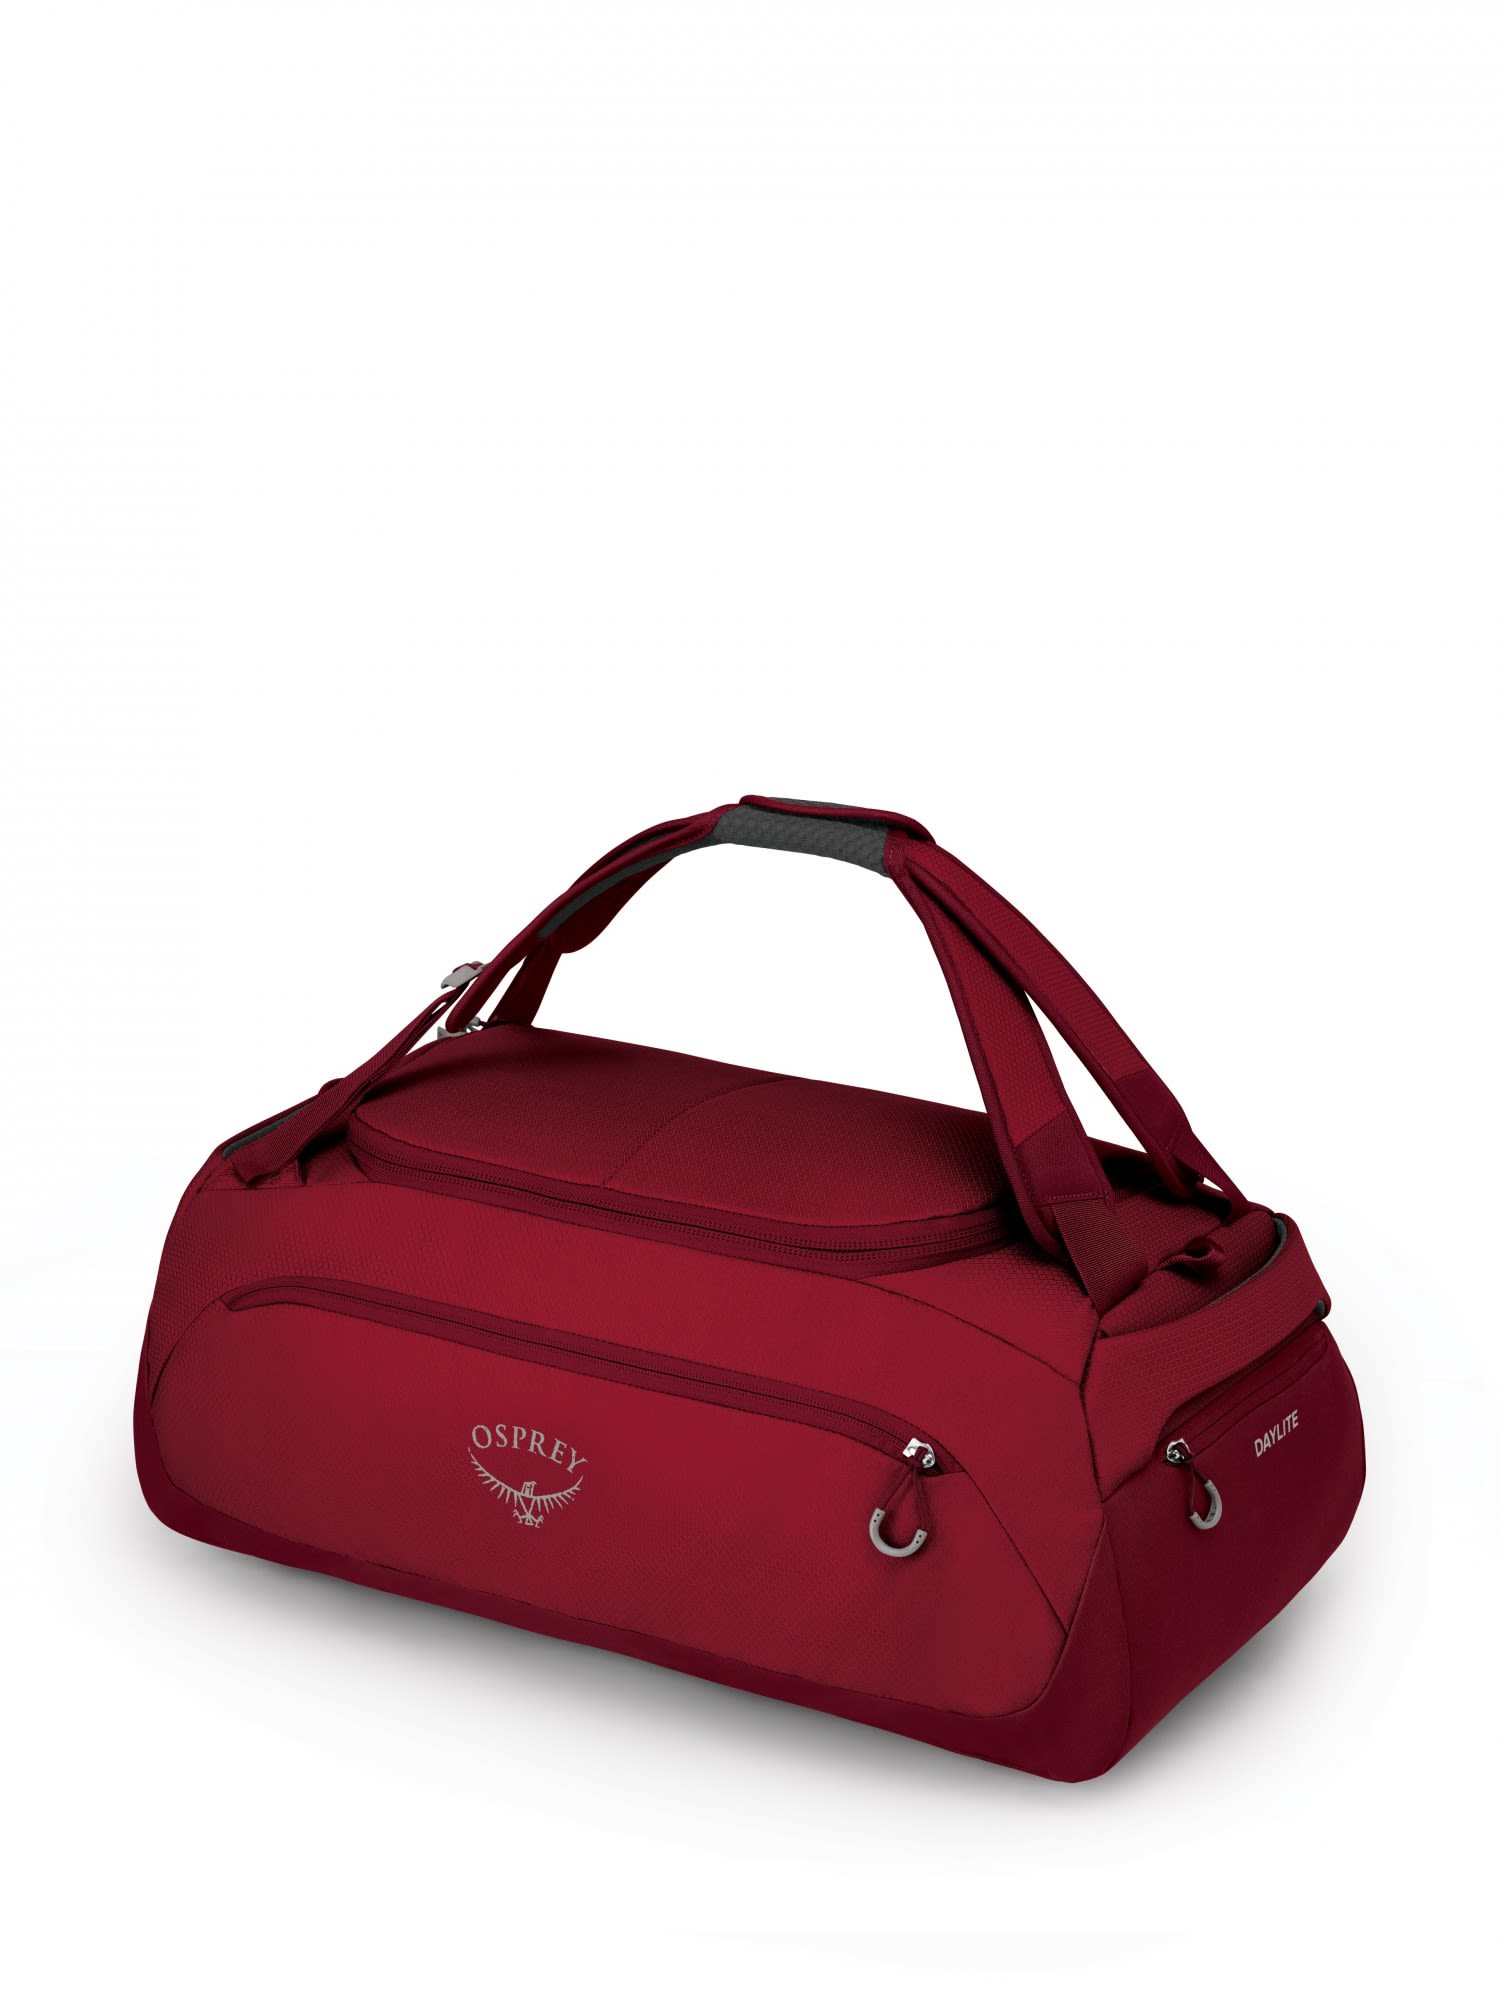 Osprey Daylite Duffel 45 Rot- Sporttaschen- Grsse 45l - Farbe Cosmic Red unter Osprey